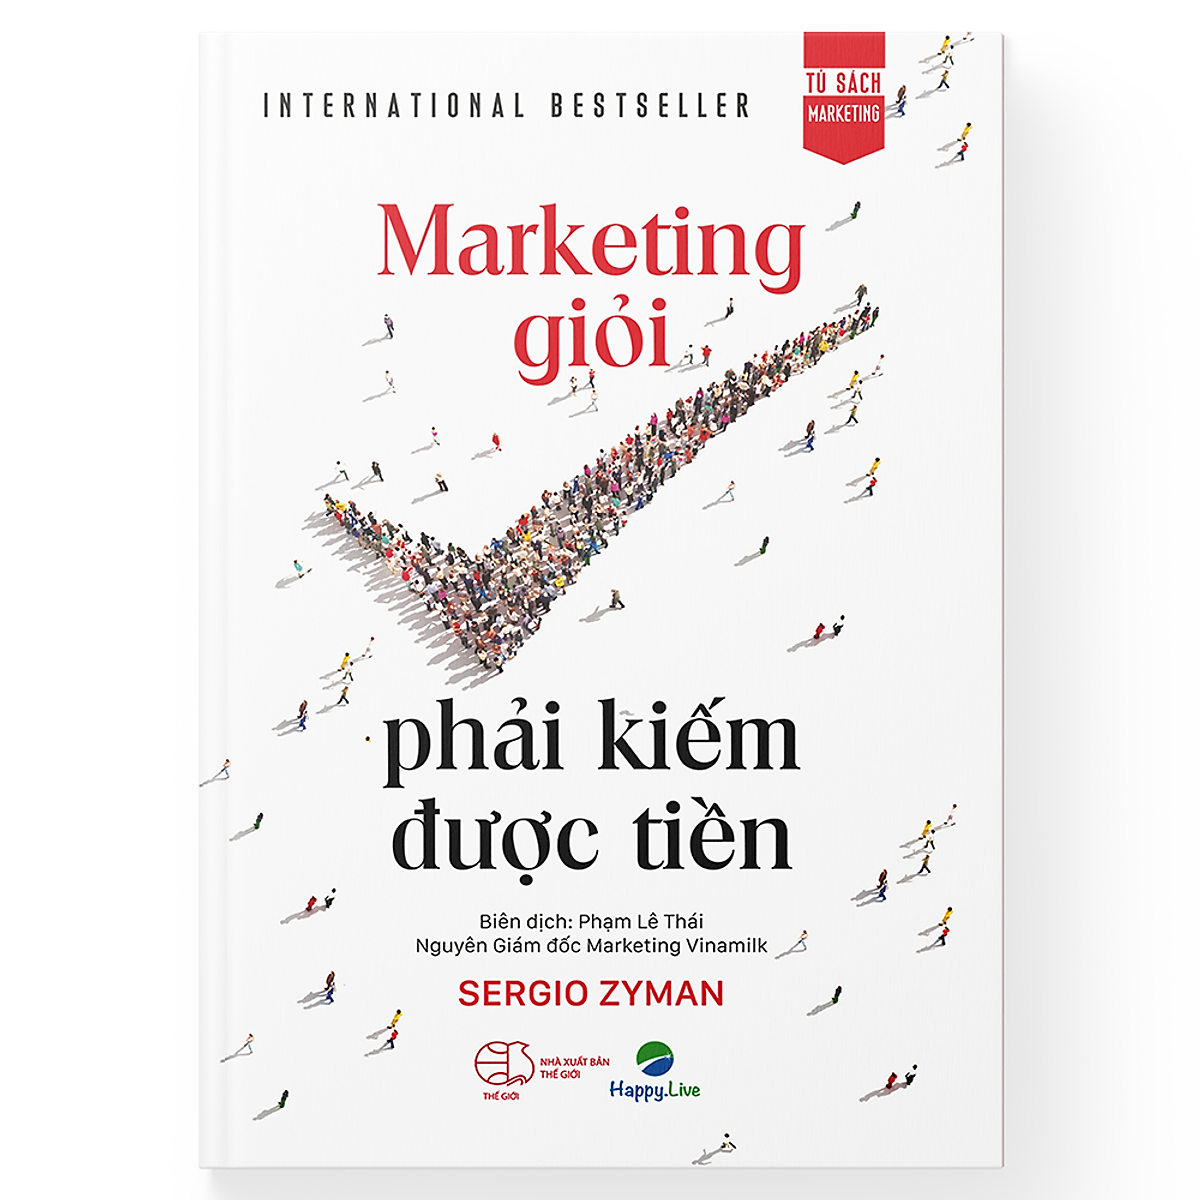 Sách hay về marketing online 2